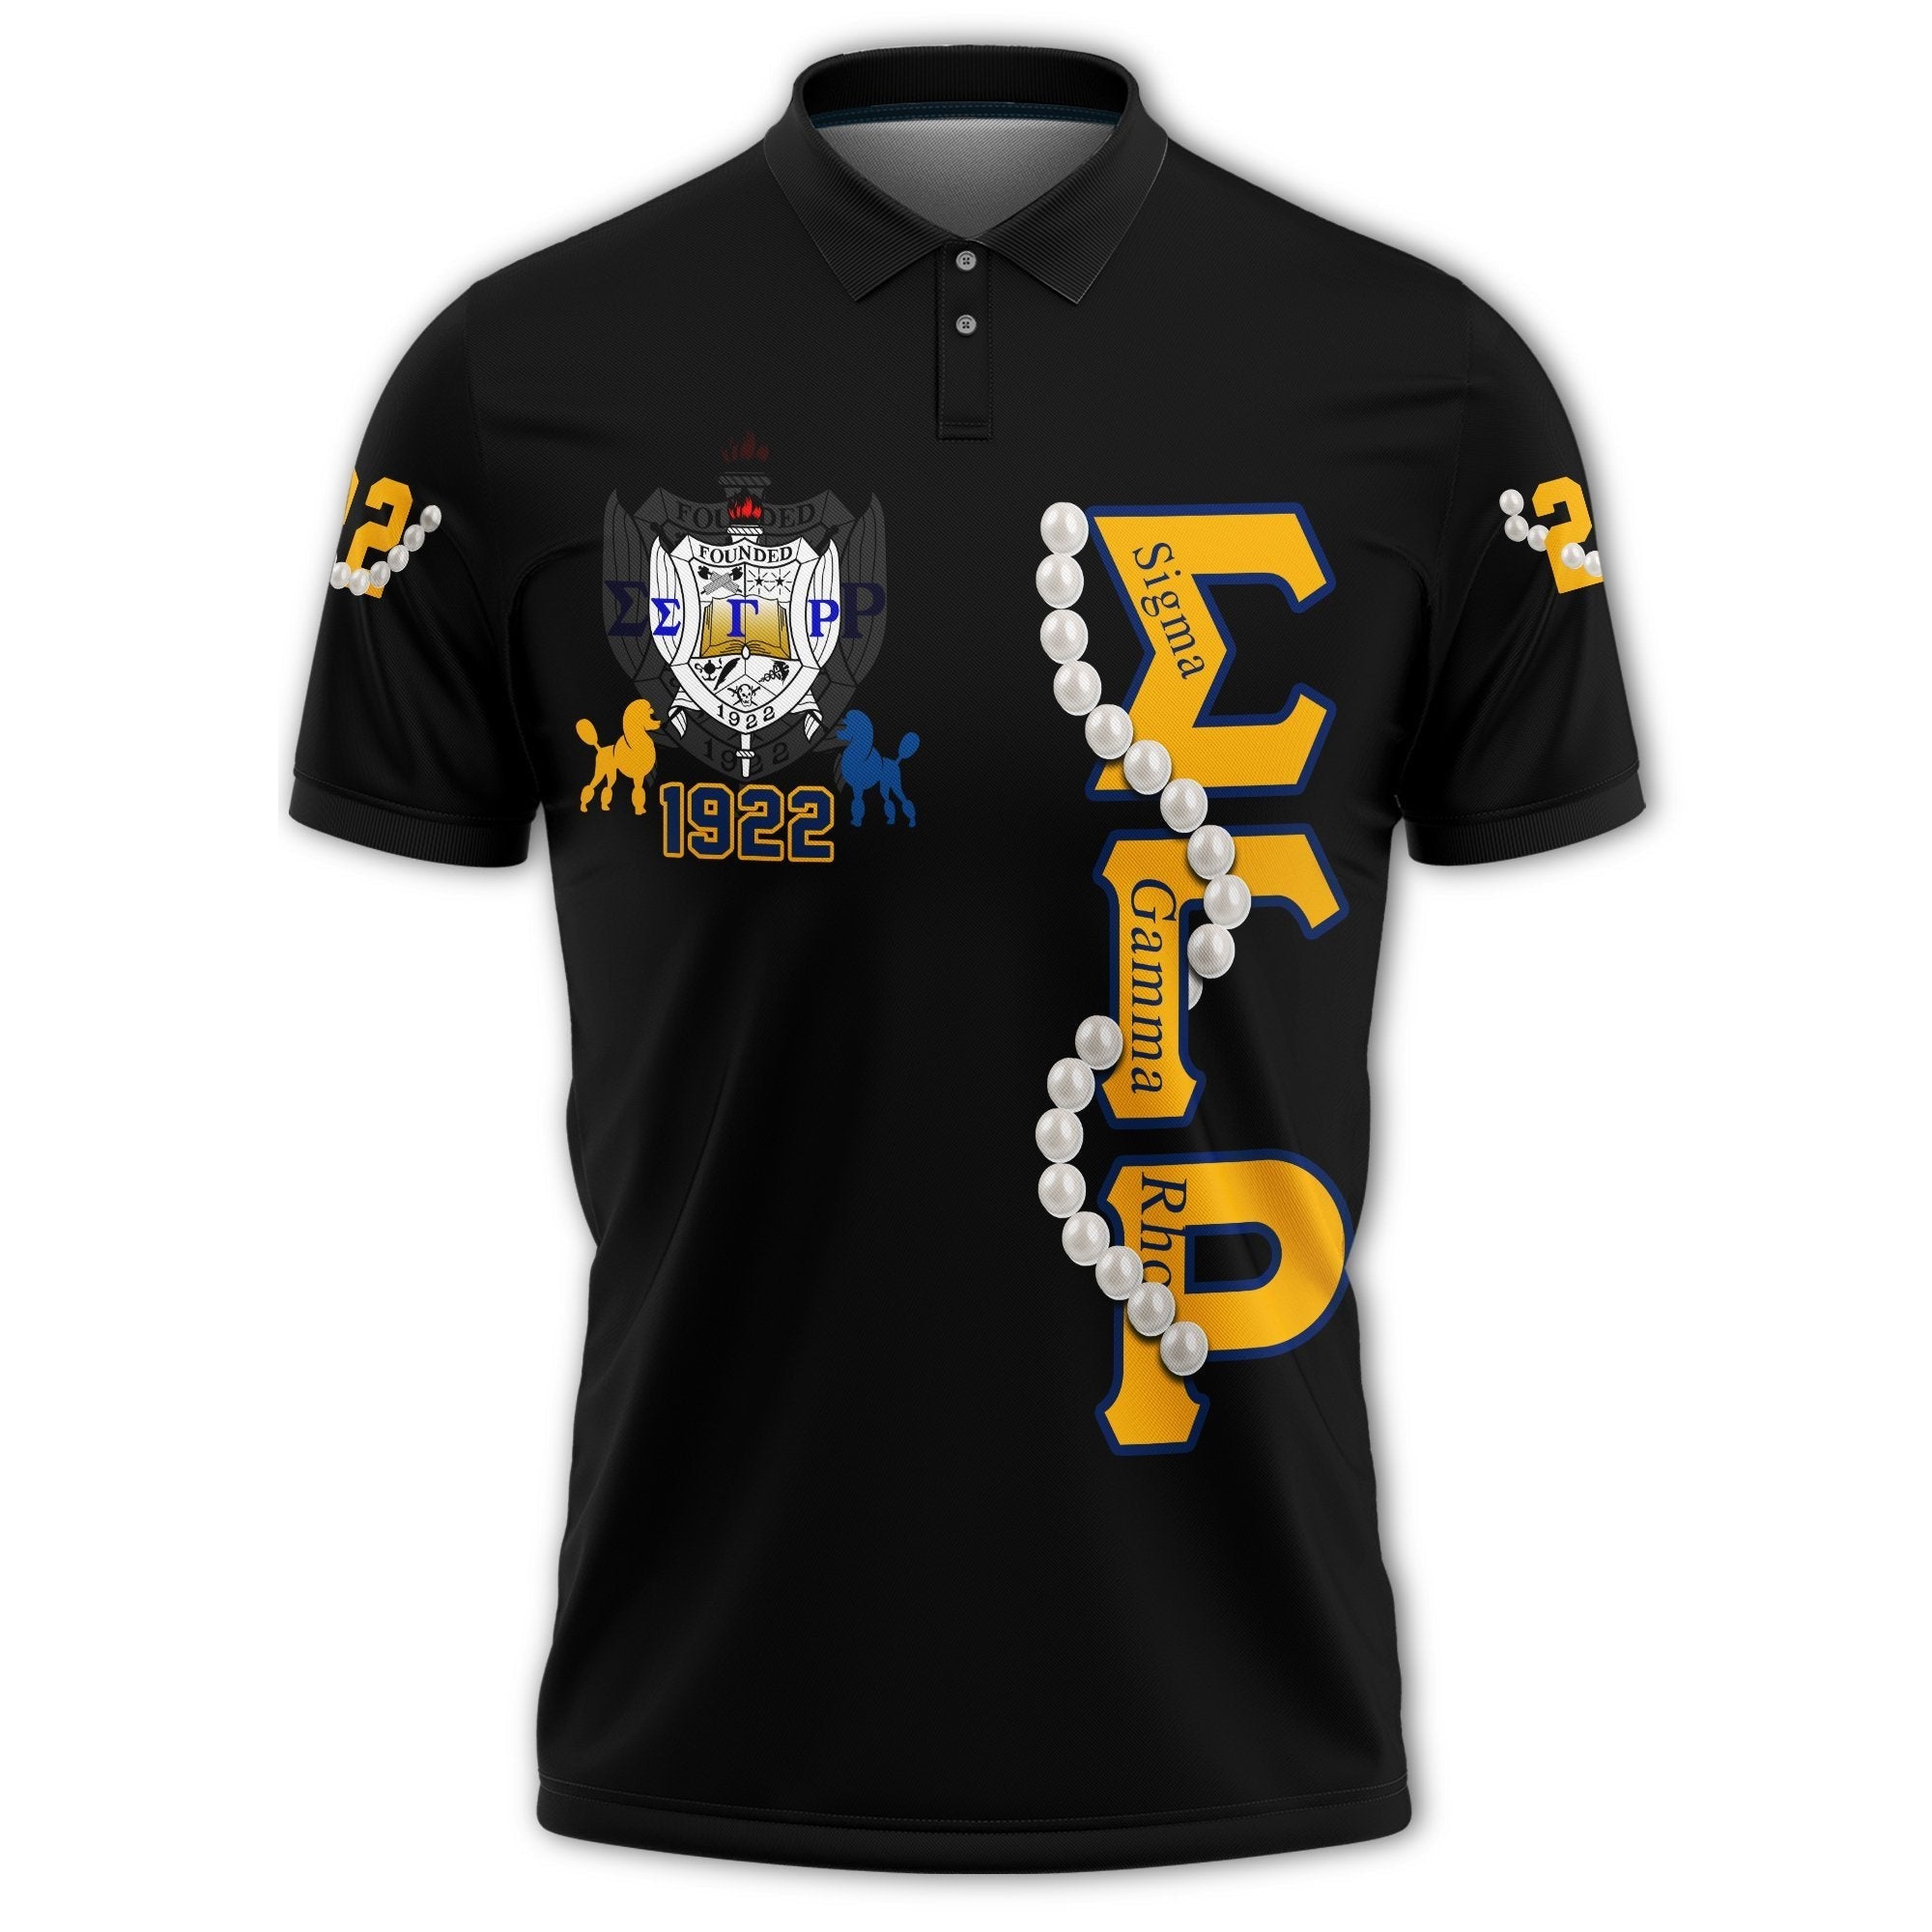 Sorority Polo - Sigma Gamma Rho Pearl Polo Shirt